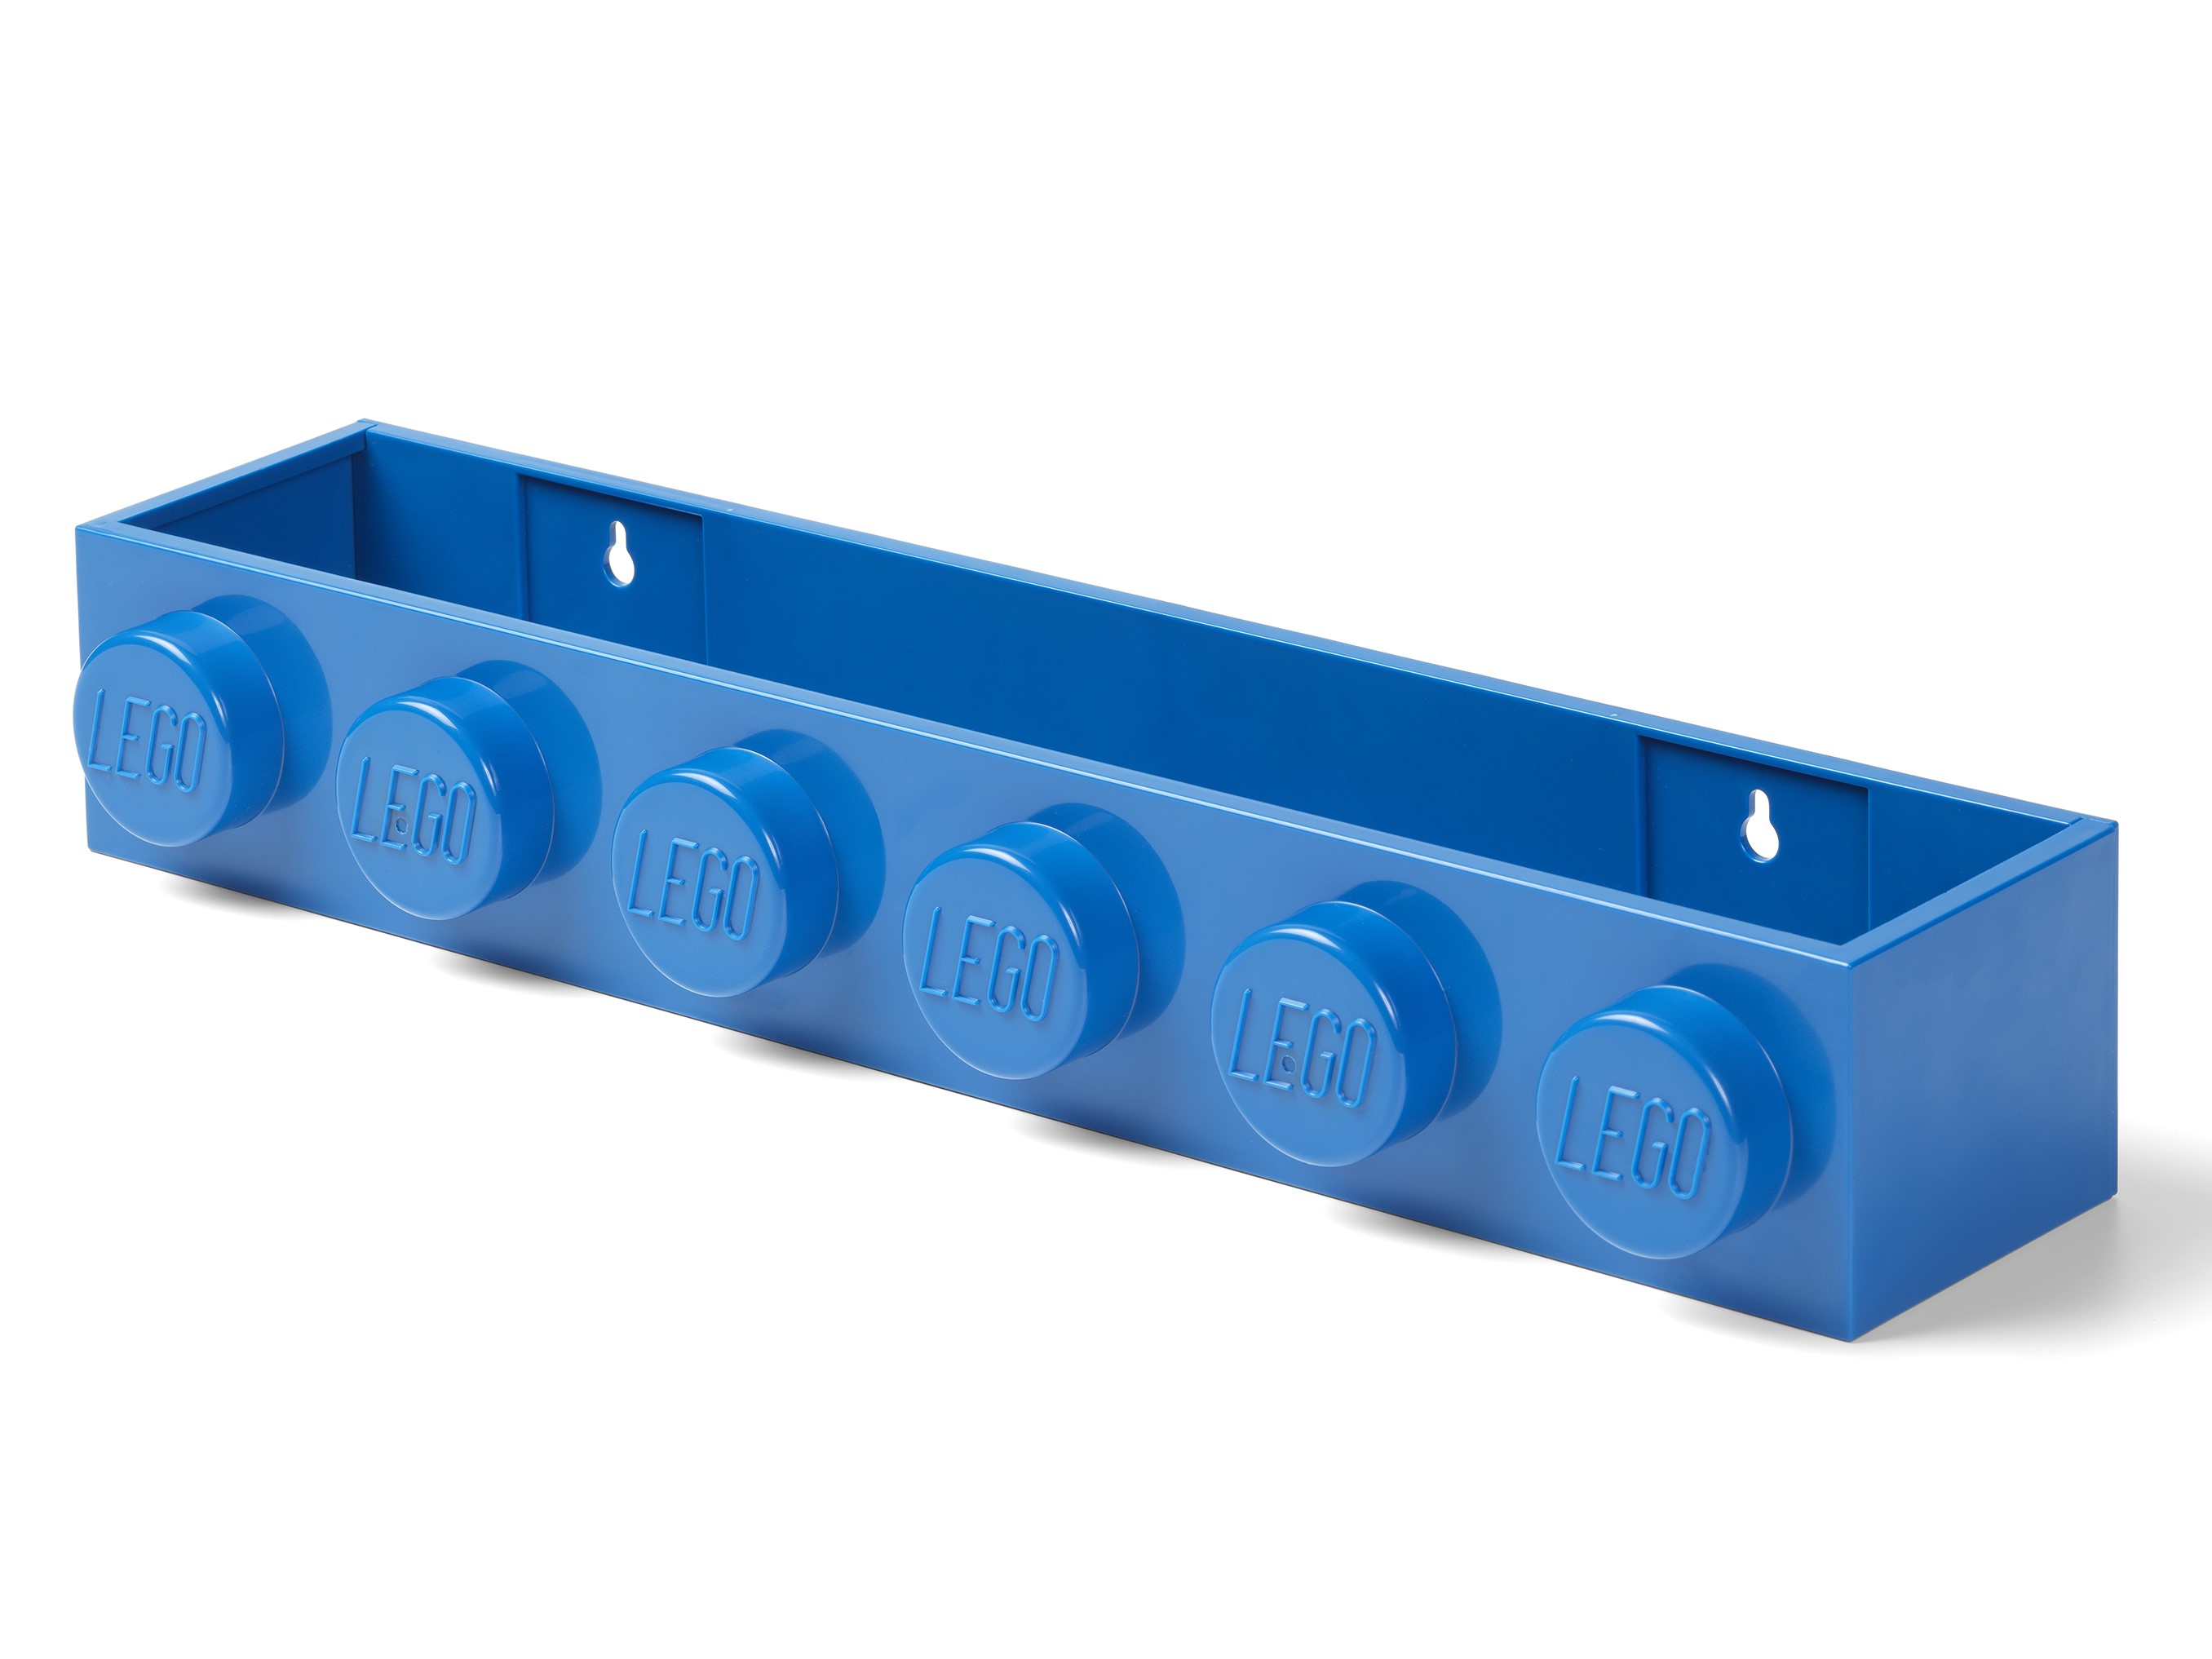 Lego Storage Book Rack - Blue